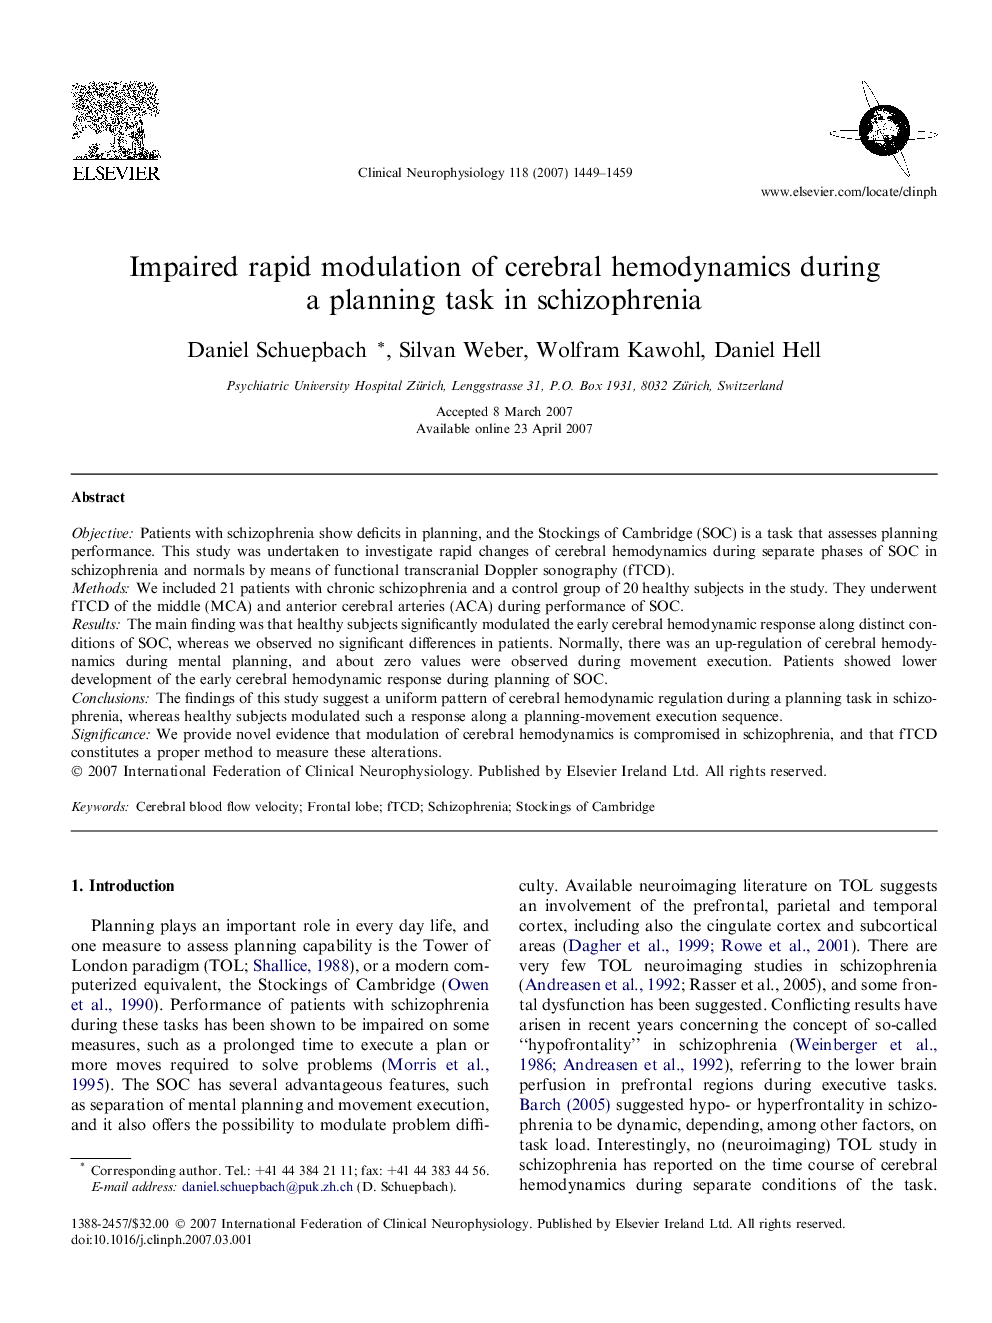 Impaired rapid modulation of cerebral hemodynamics during a planning task in schizophrenia